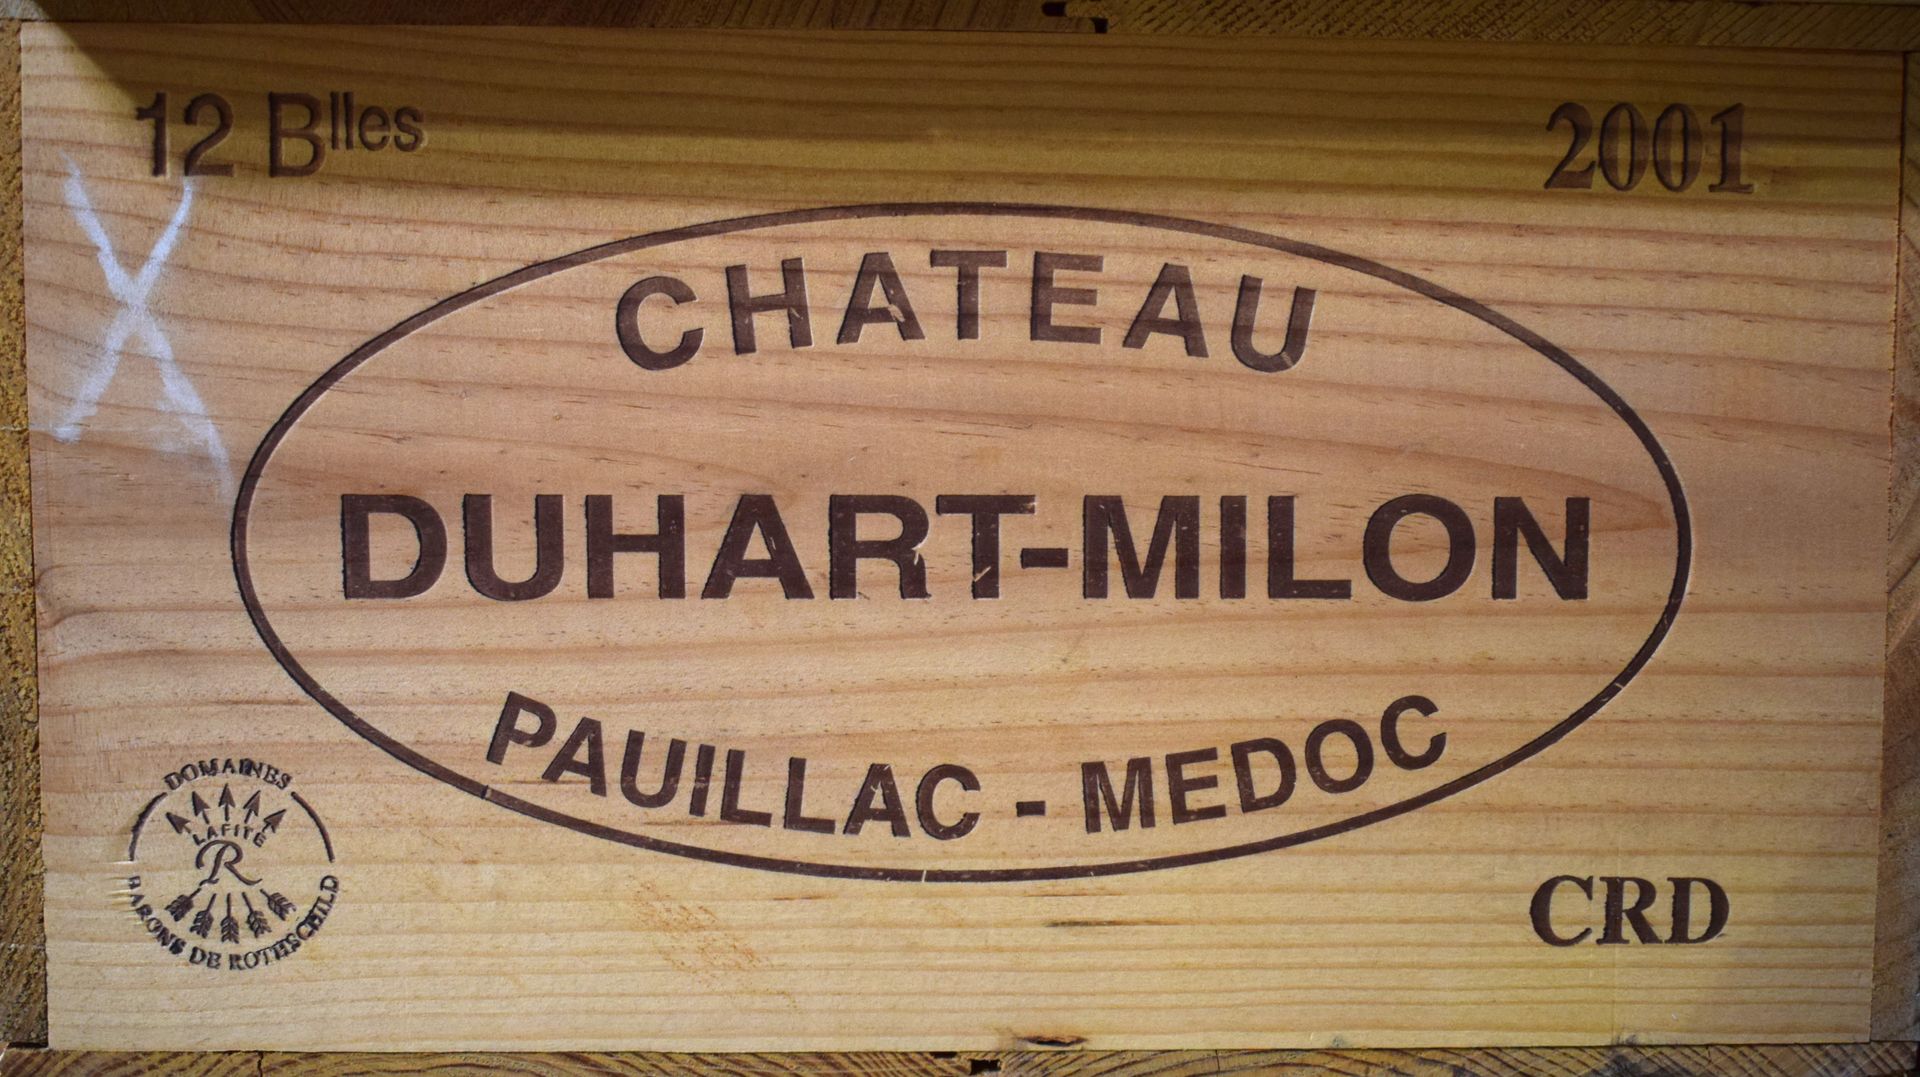 Null (PAUILLAC)木箱中，一套12瓶杜哈特-米隆酒庄，波亚克-梅多克产区，罗思柴尔德男爵酒庄，红葡萄酒，2001年份